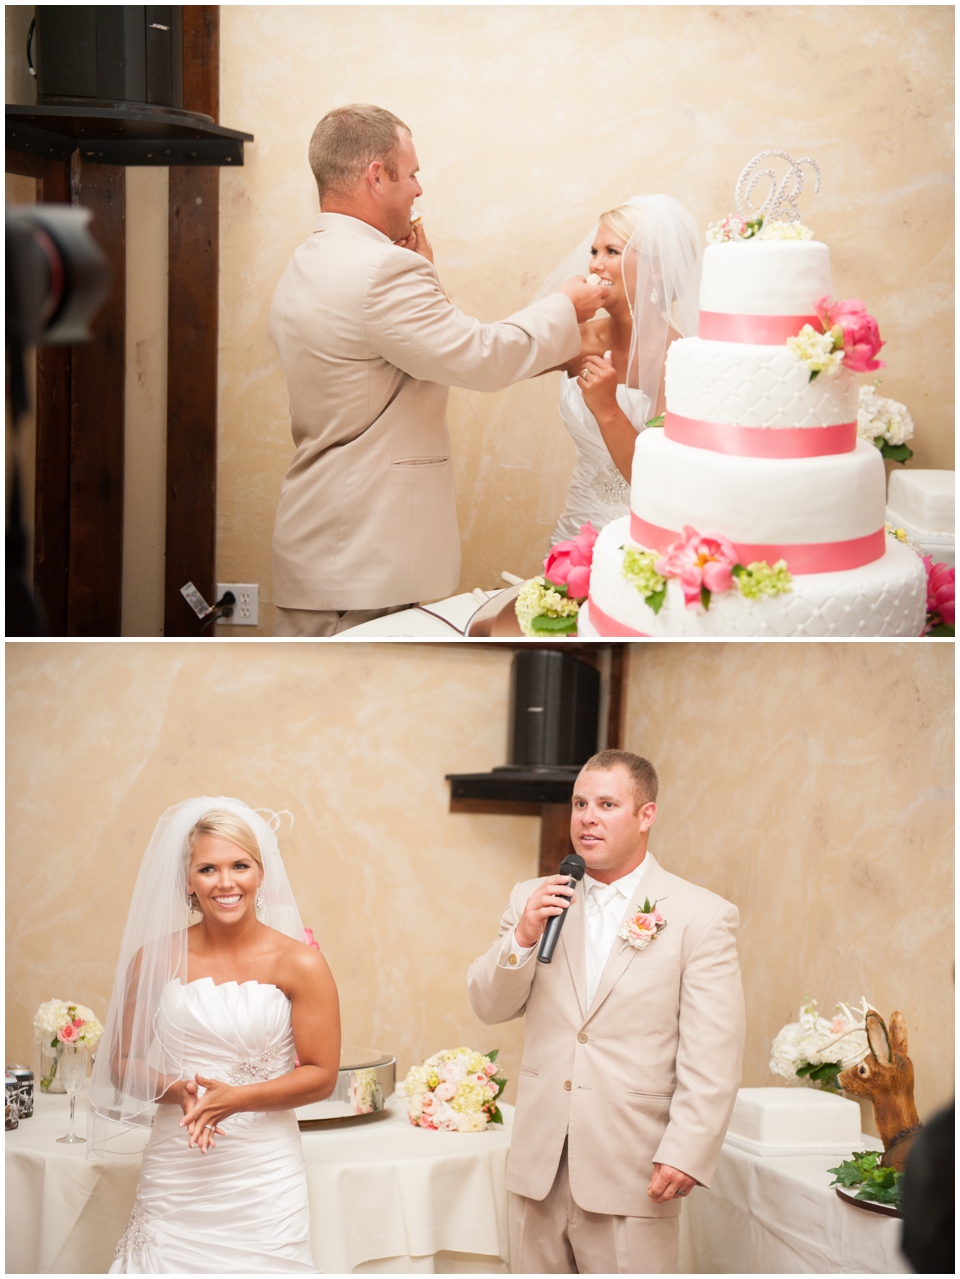 bride and groom cutting the wedding cake, stony point hall wedding reception, melissa sigler photography